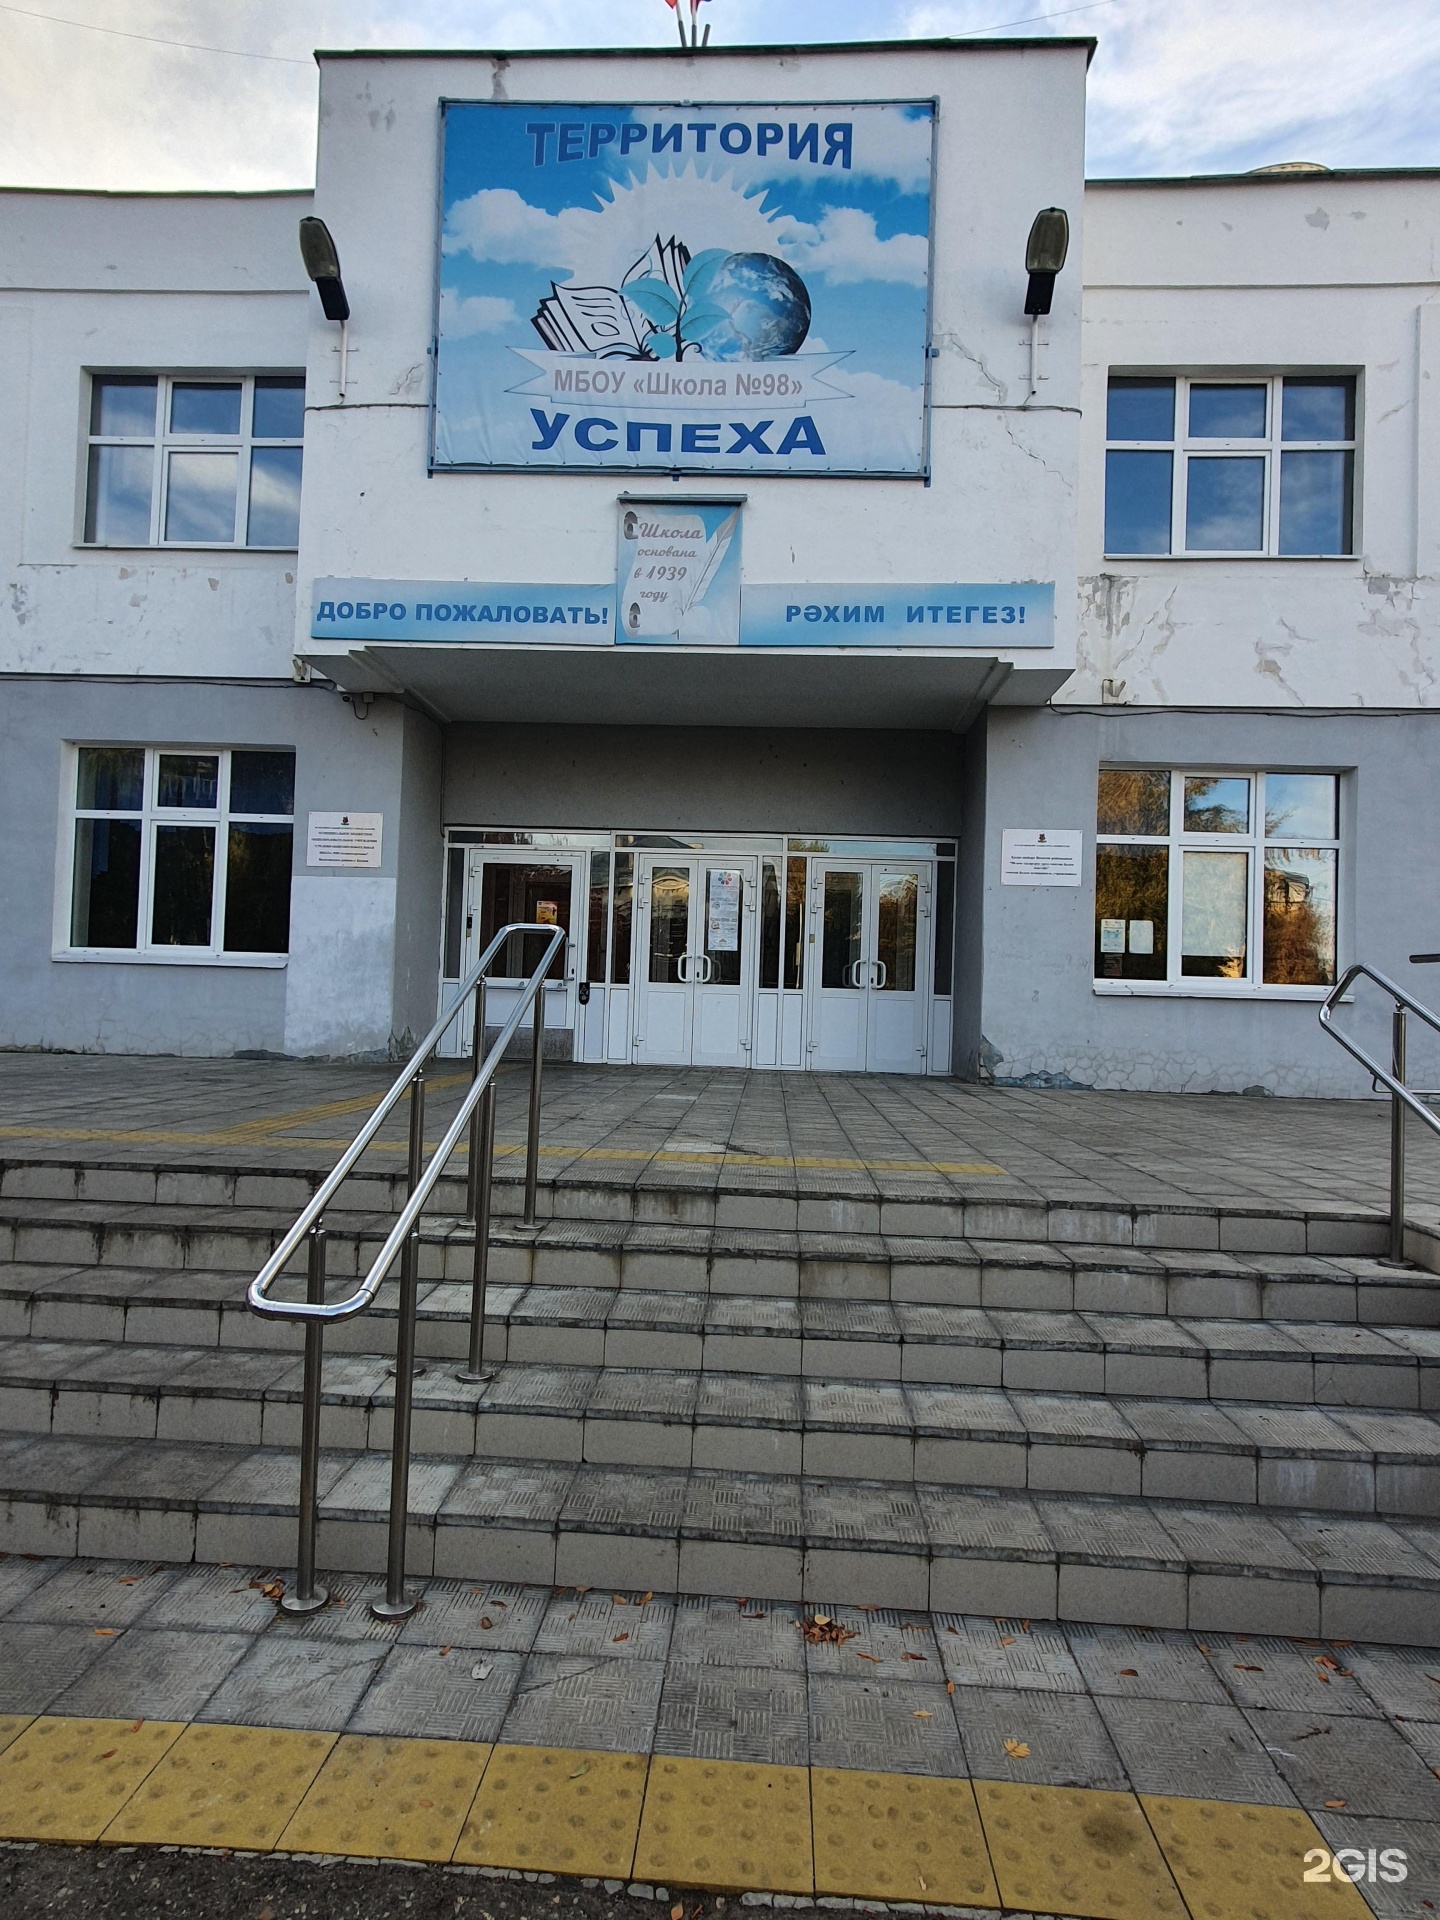 Russian secondary school